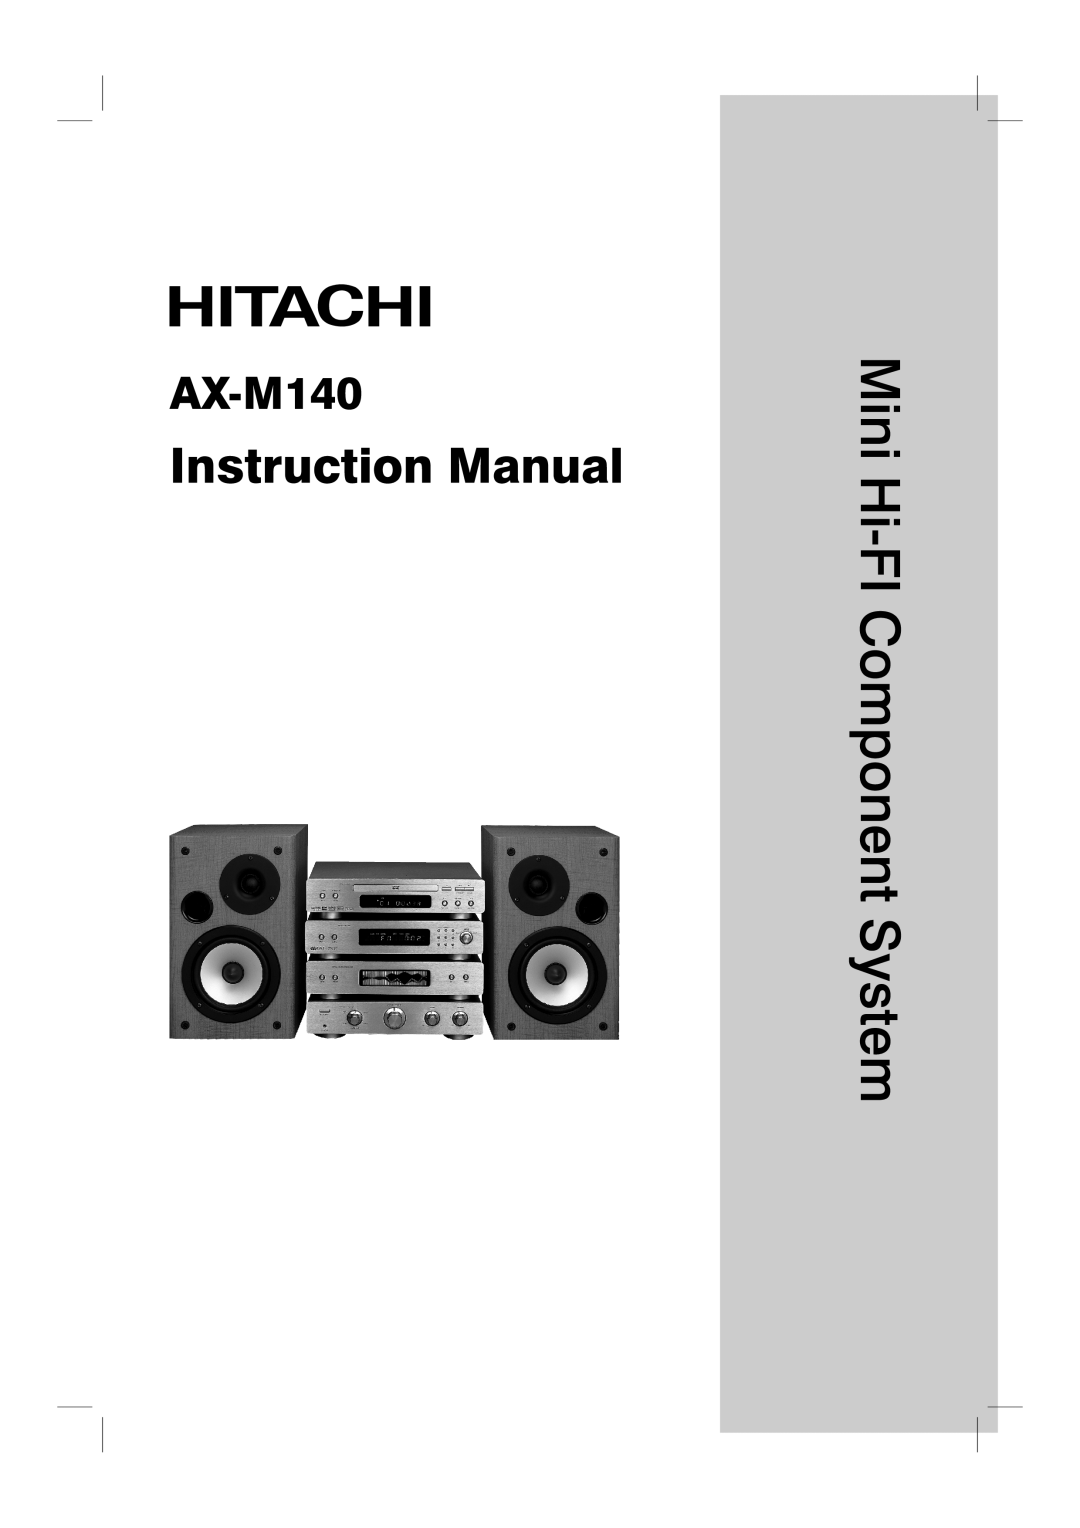 Hitachi AX-M140 manual 